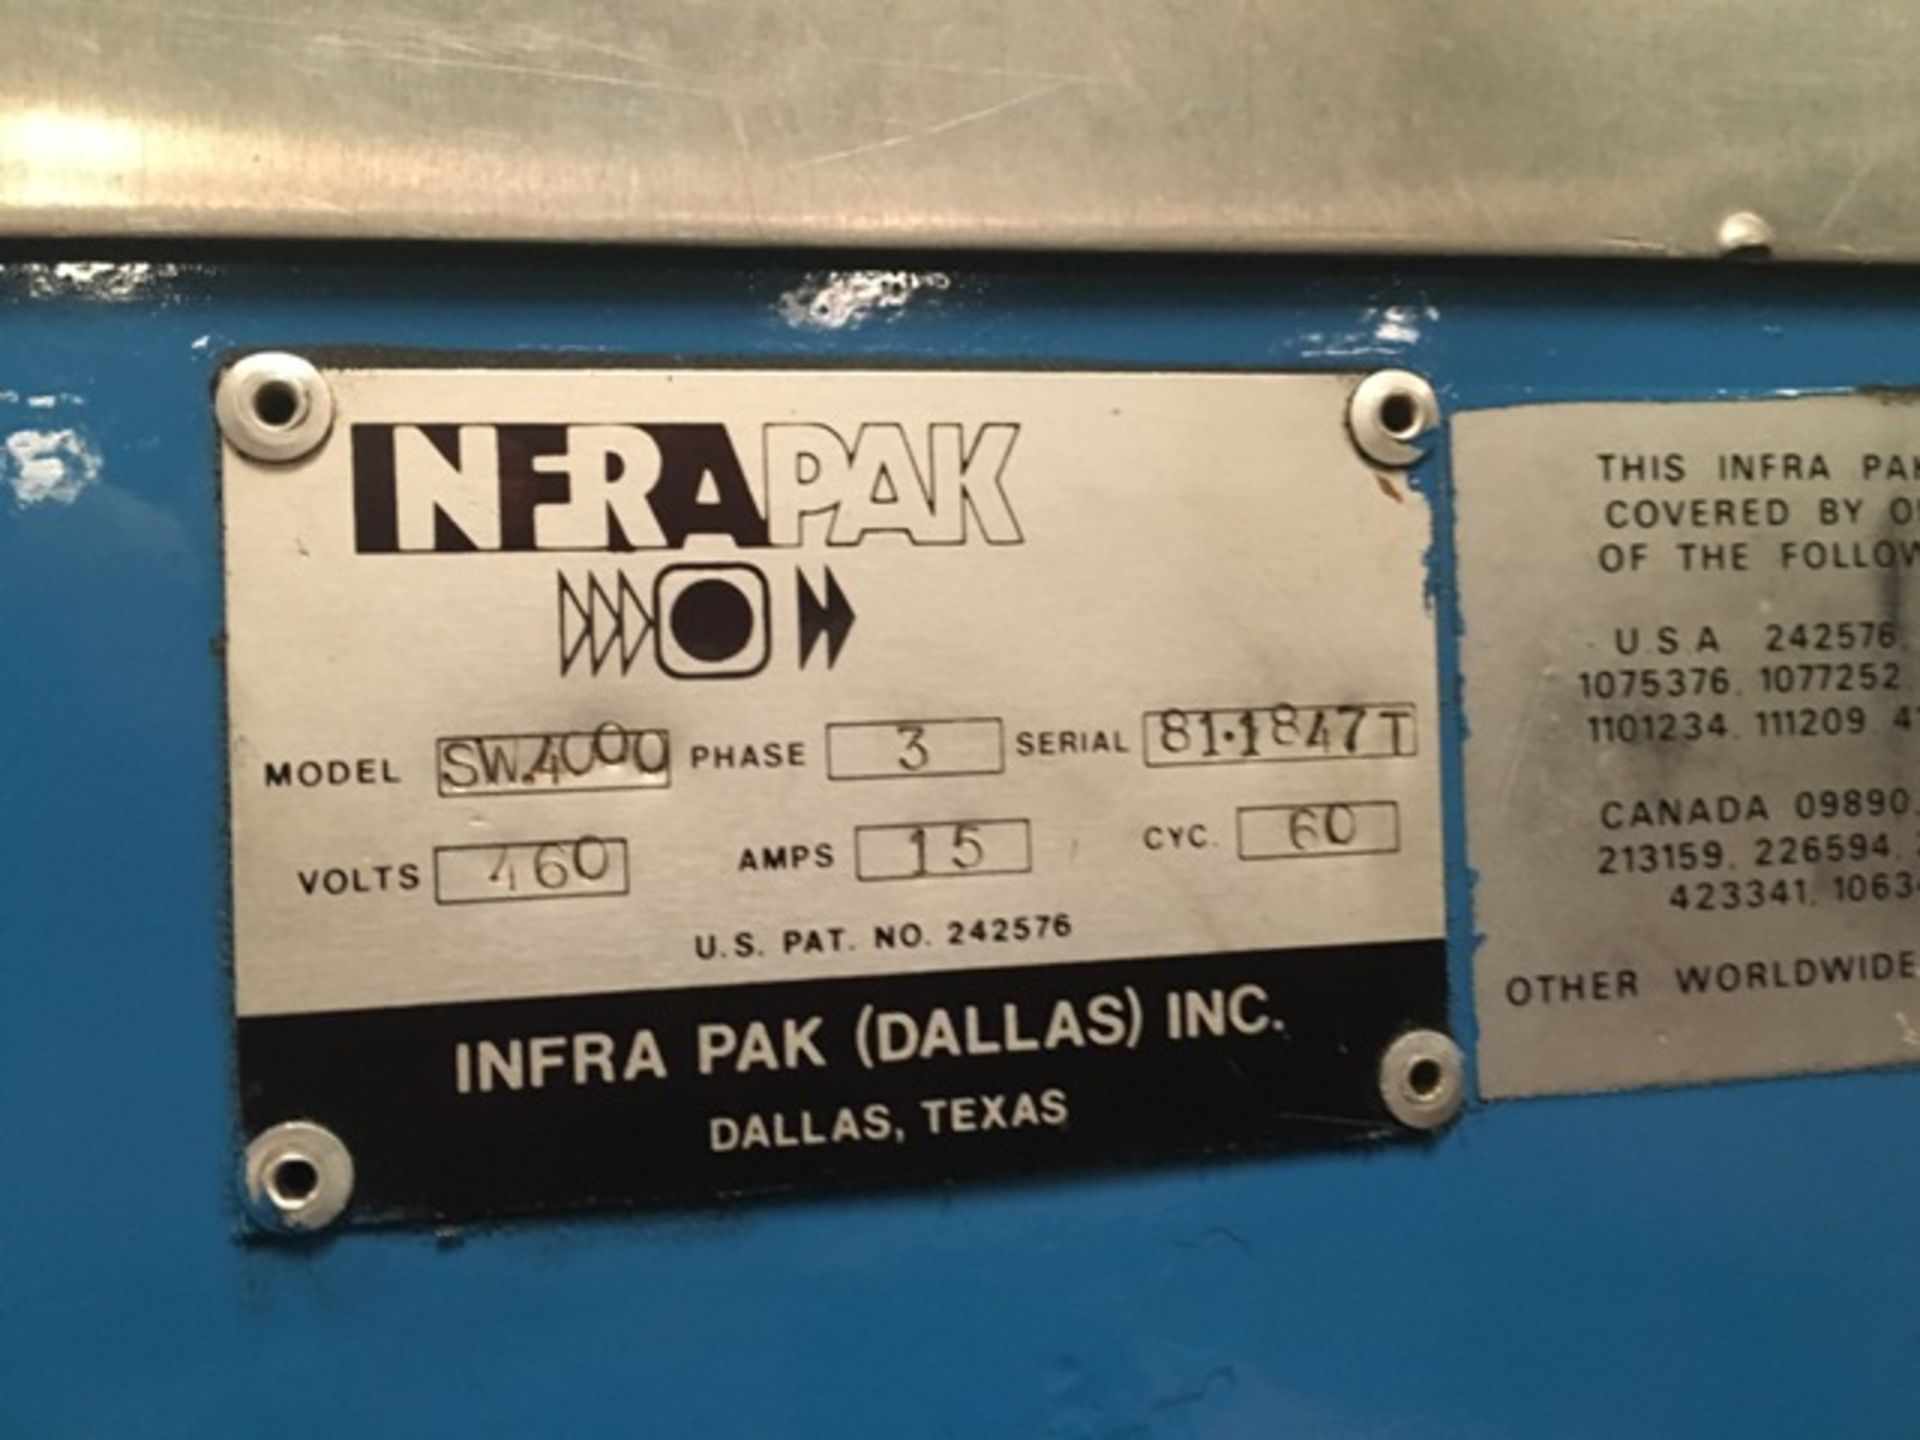 NFRA PAK Shrink Wrapper, Model #SW4000, Serial #81-1847T, 460 Volts, 3 Phase, 15 Amps - Image 3 of 3